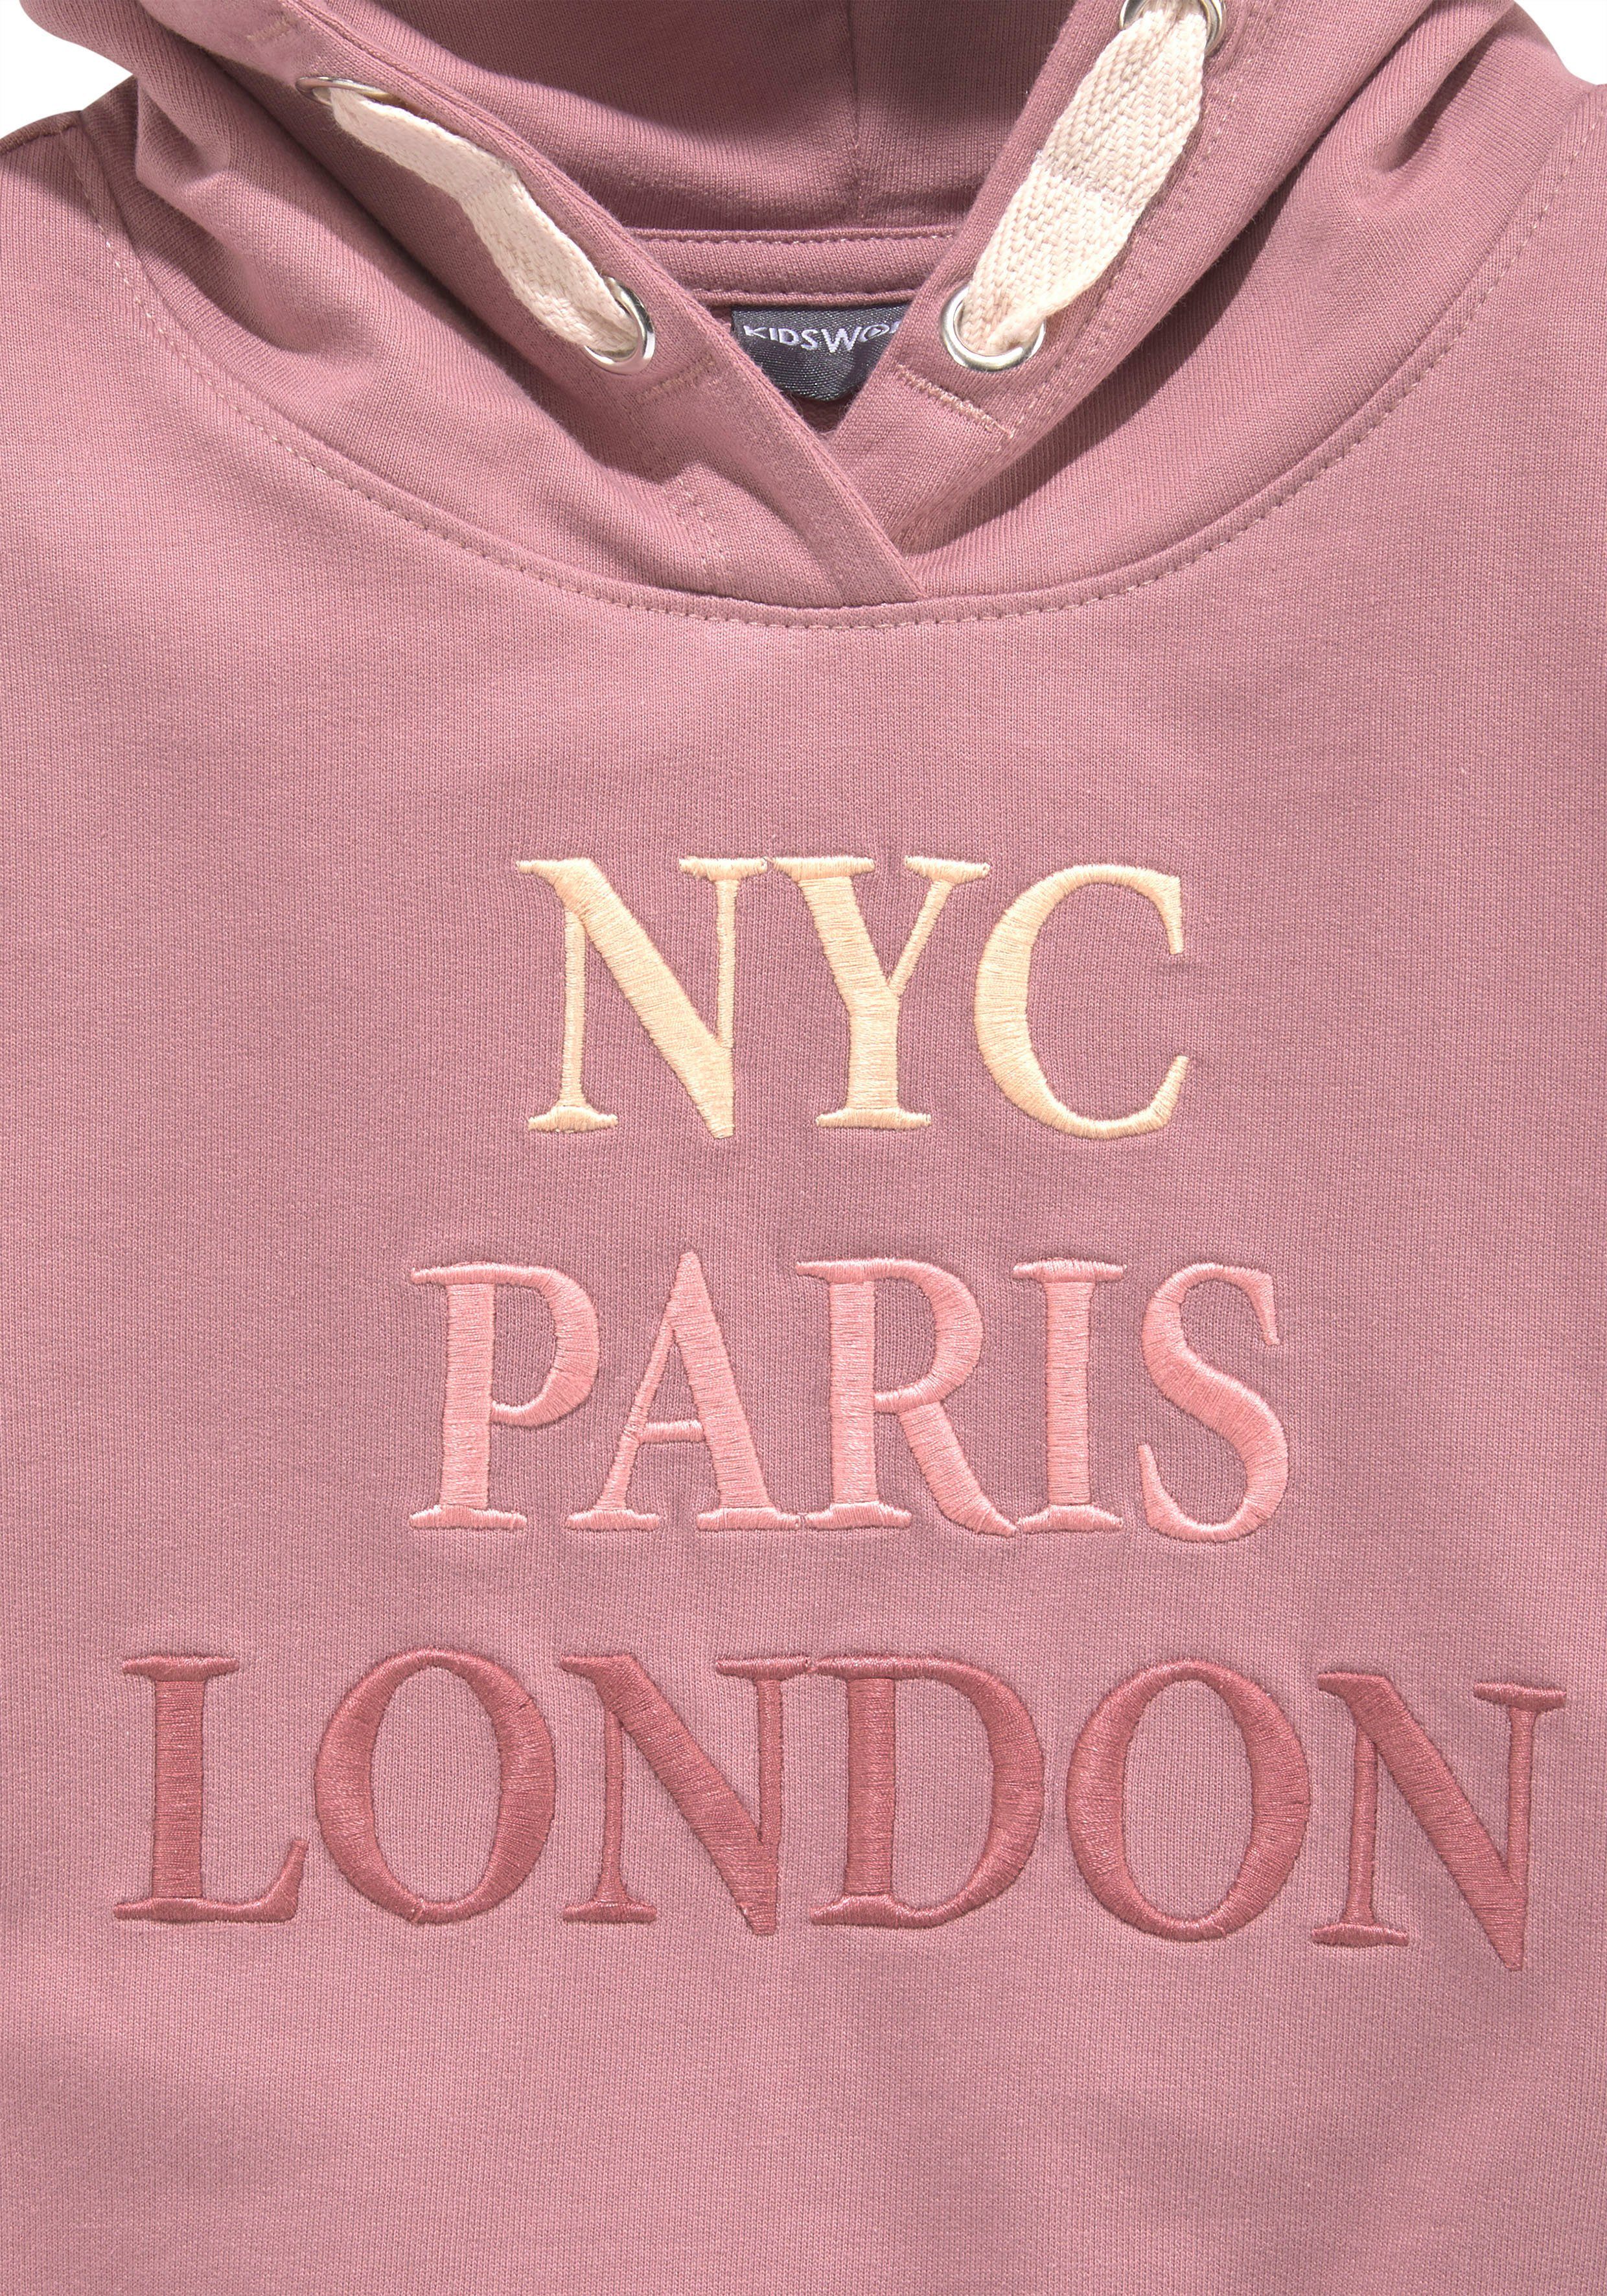 KIDSWORLD Kapuzensweatshirt NYC Paris Stickerei mit London